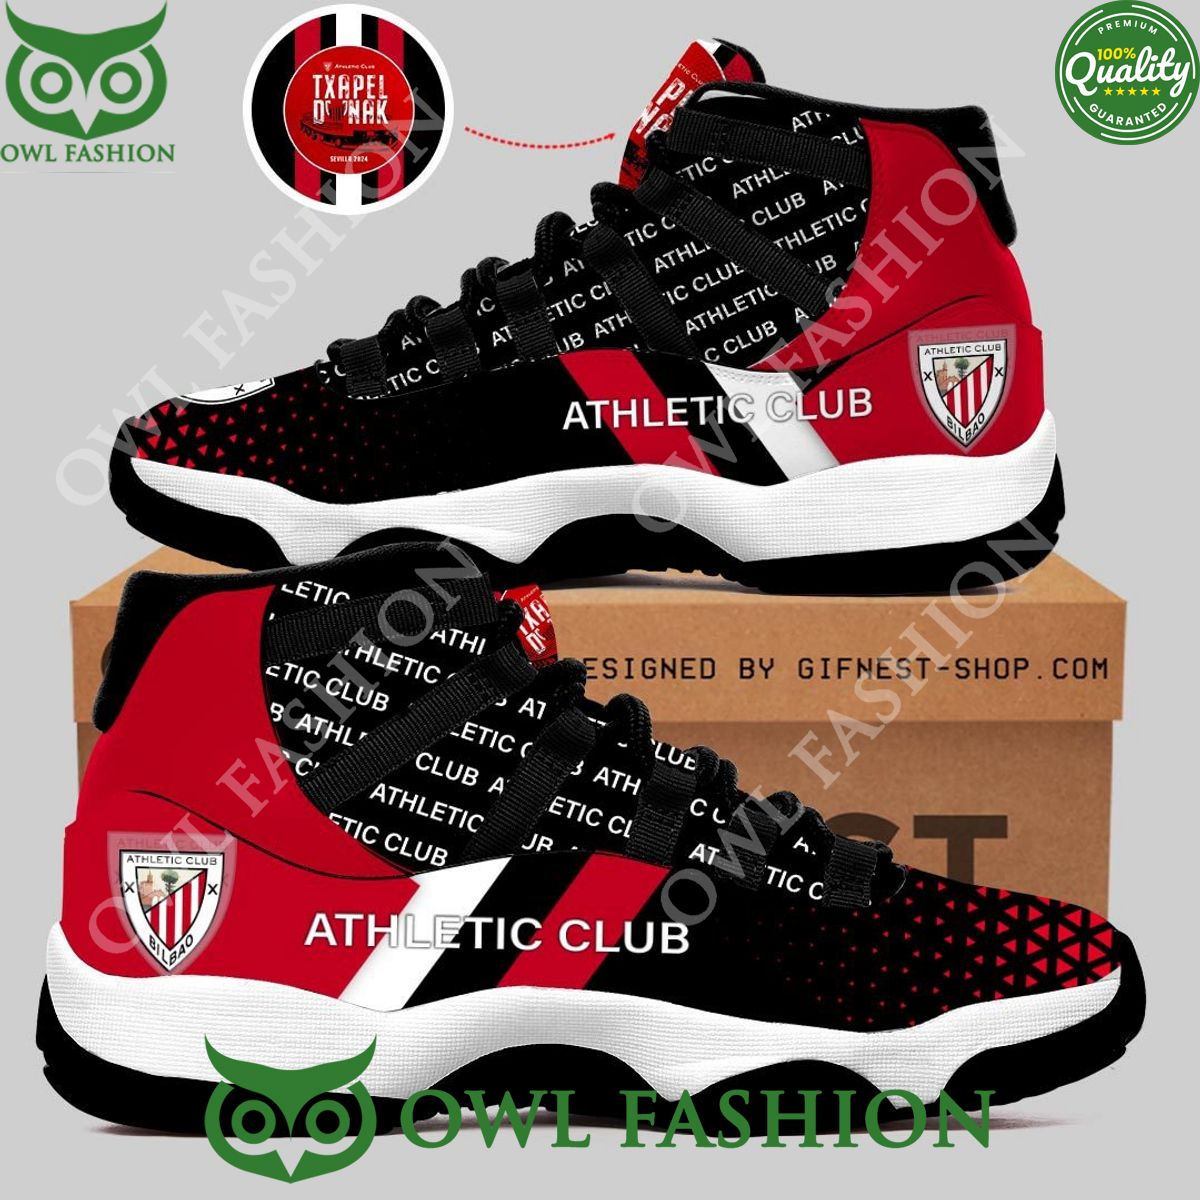 laliga athletic club txapel dunak air jordan 11 shoes 1 Lq6Rk.jpg